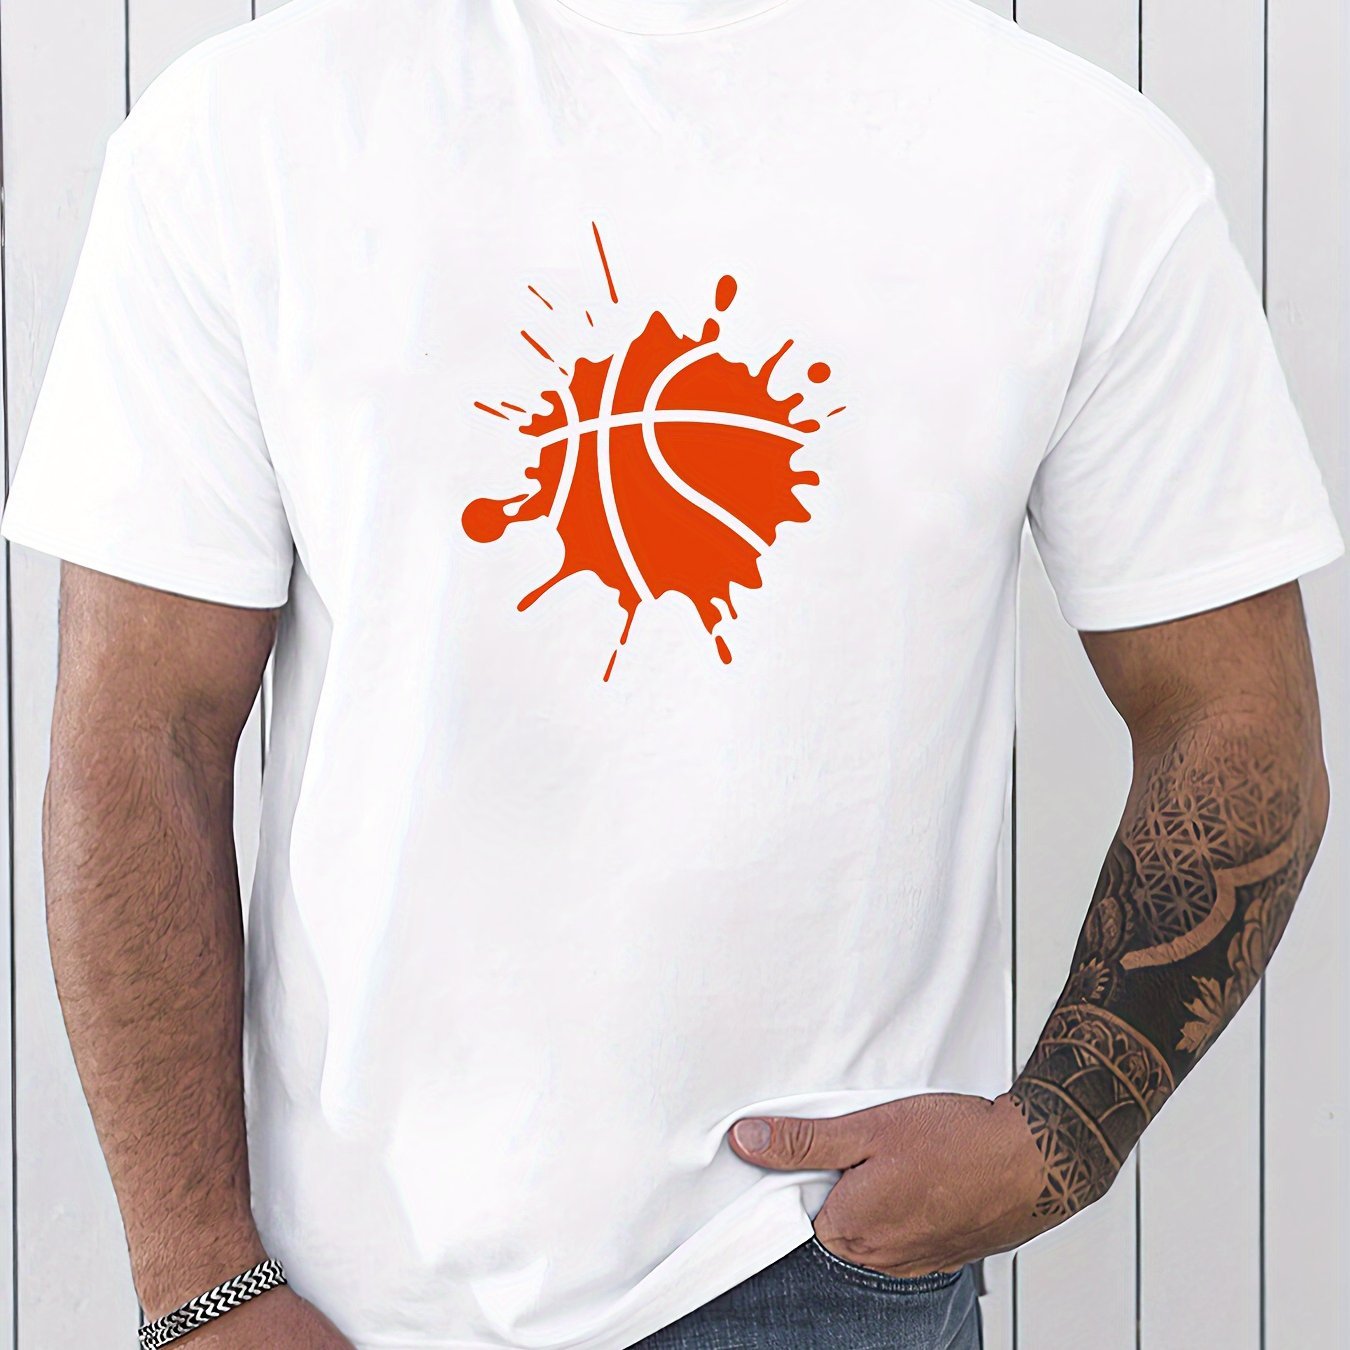 

1 Piece, 100% Cotton T-shirt, Basketball Paint Graphic Print, Men's Novel Graphic Design T-shirt, Summer Casual Comfort T-shirt, Men's Everyday Activity Top